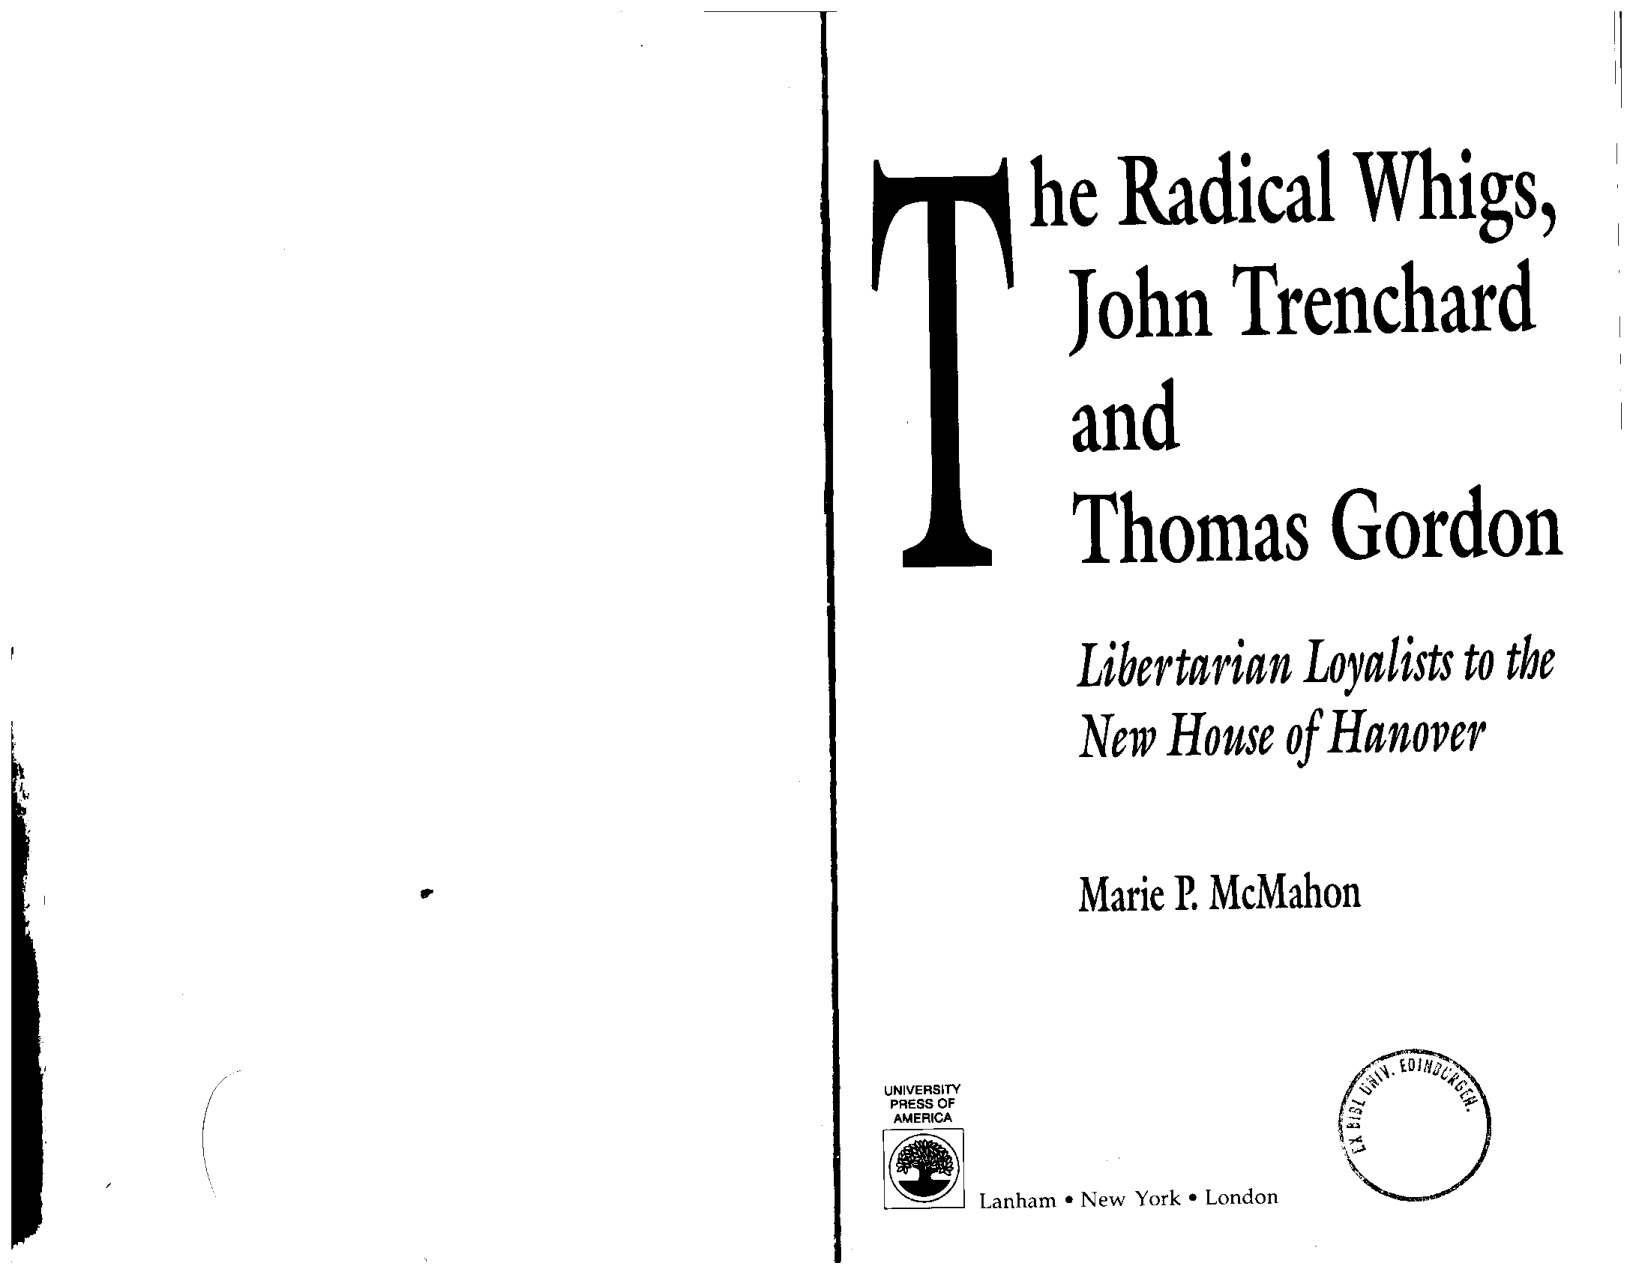 McMahon - The Radical Whigs, John Trenchard and Thomas Gordon